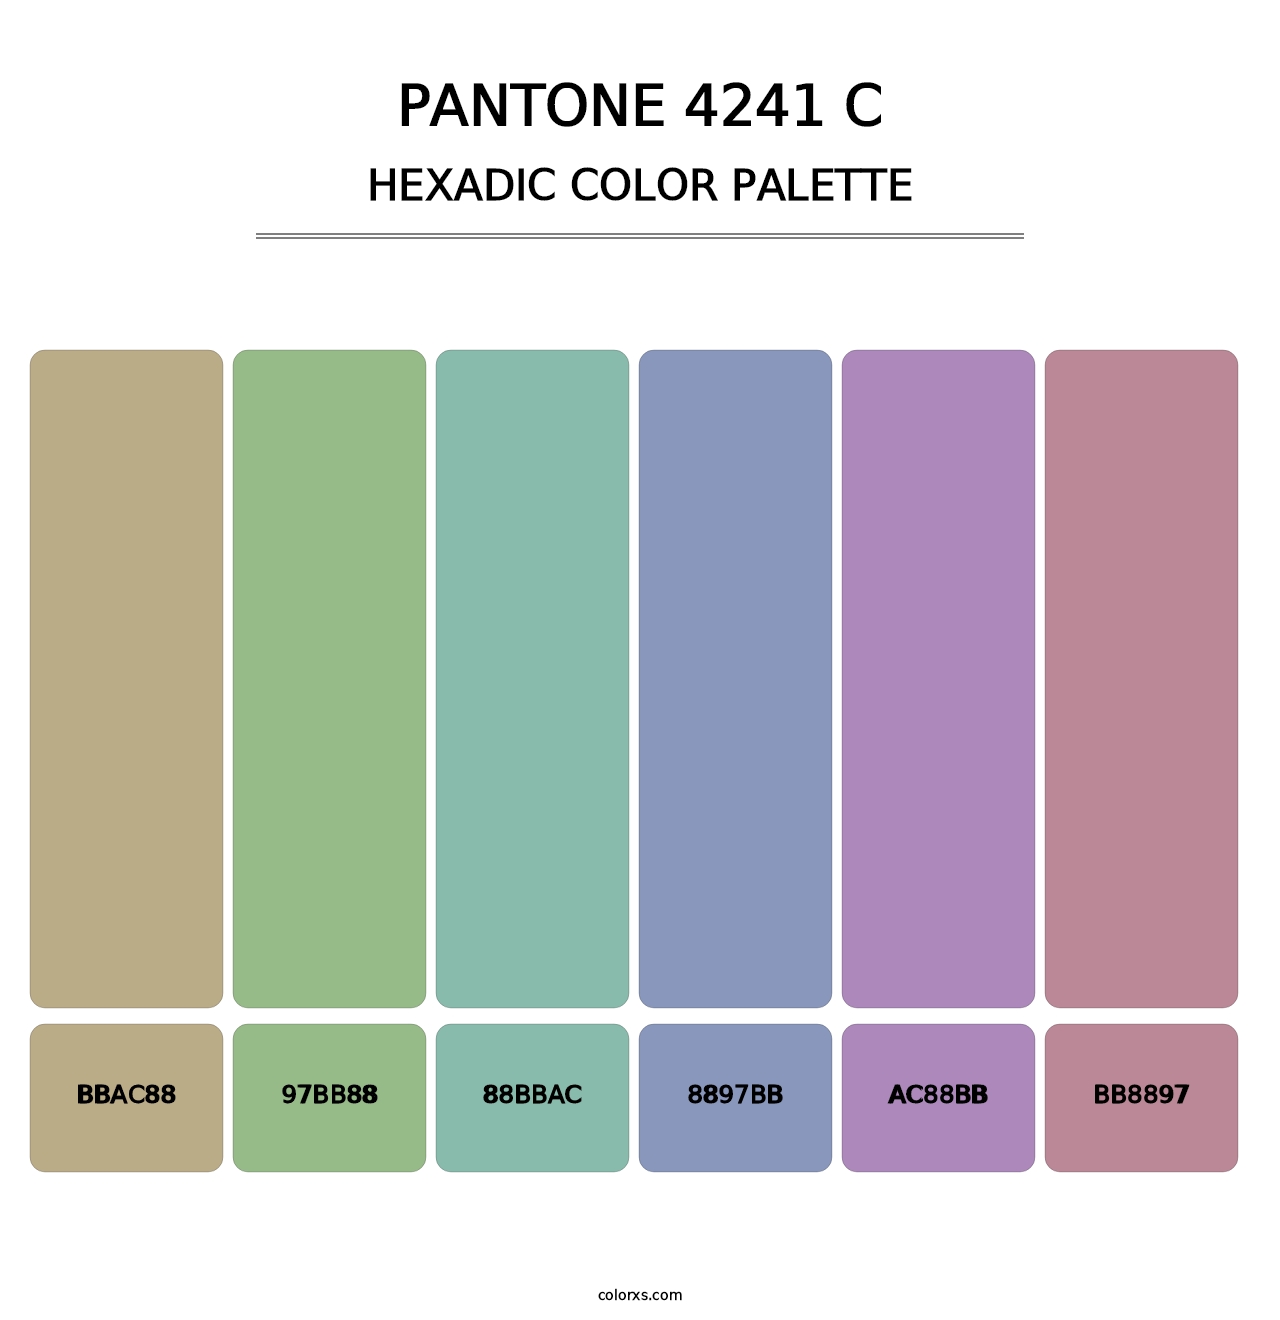 PANTONE 4241 C - Hexadic Color Palette